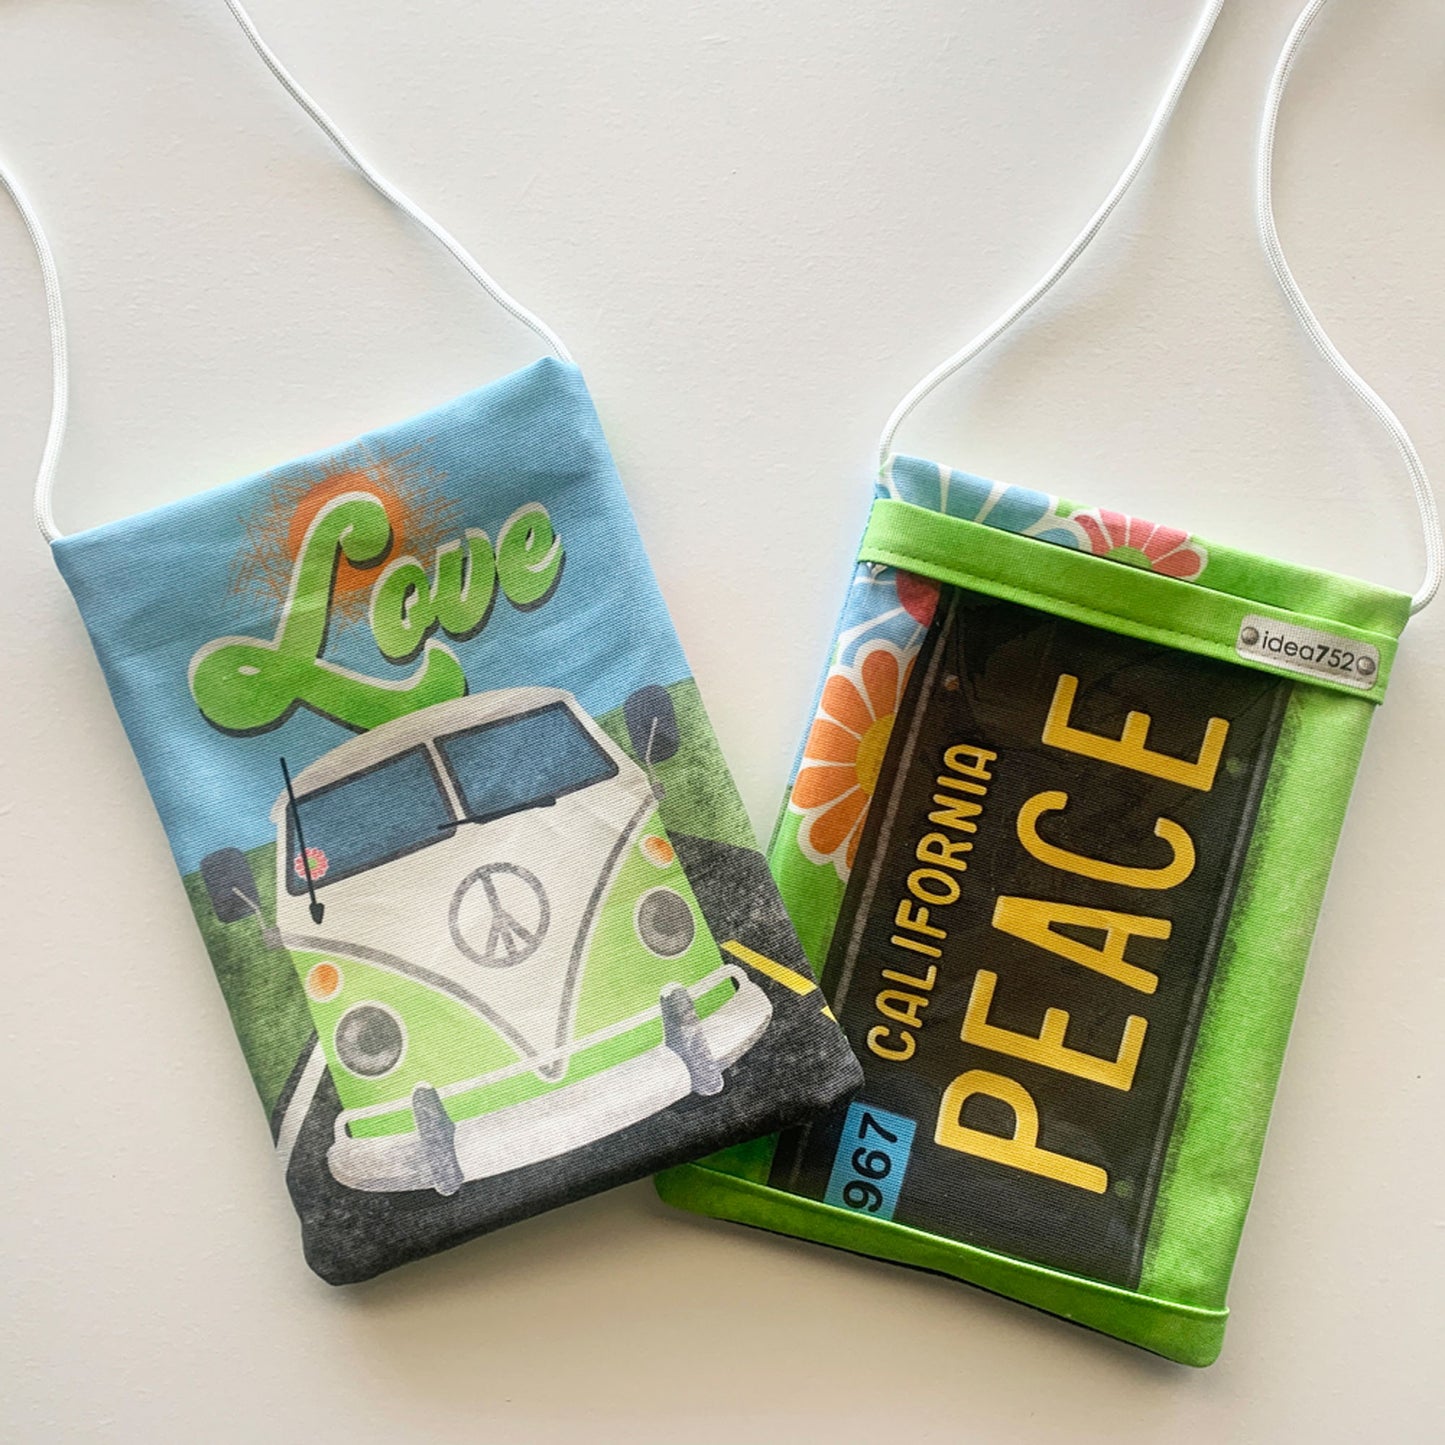 SERENA - Handmade purse with hippie bus VW van theme